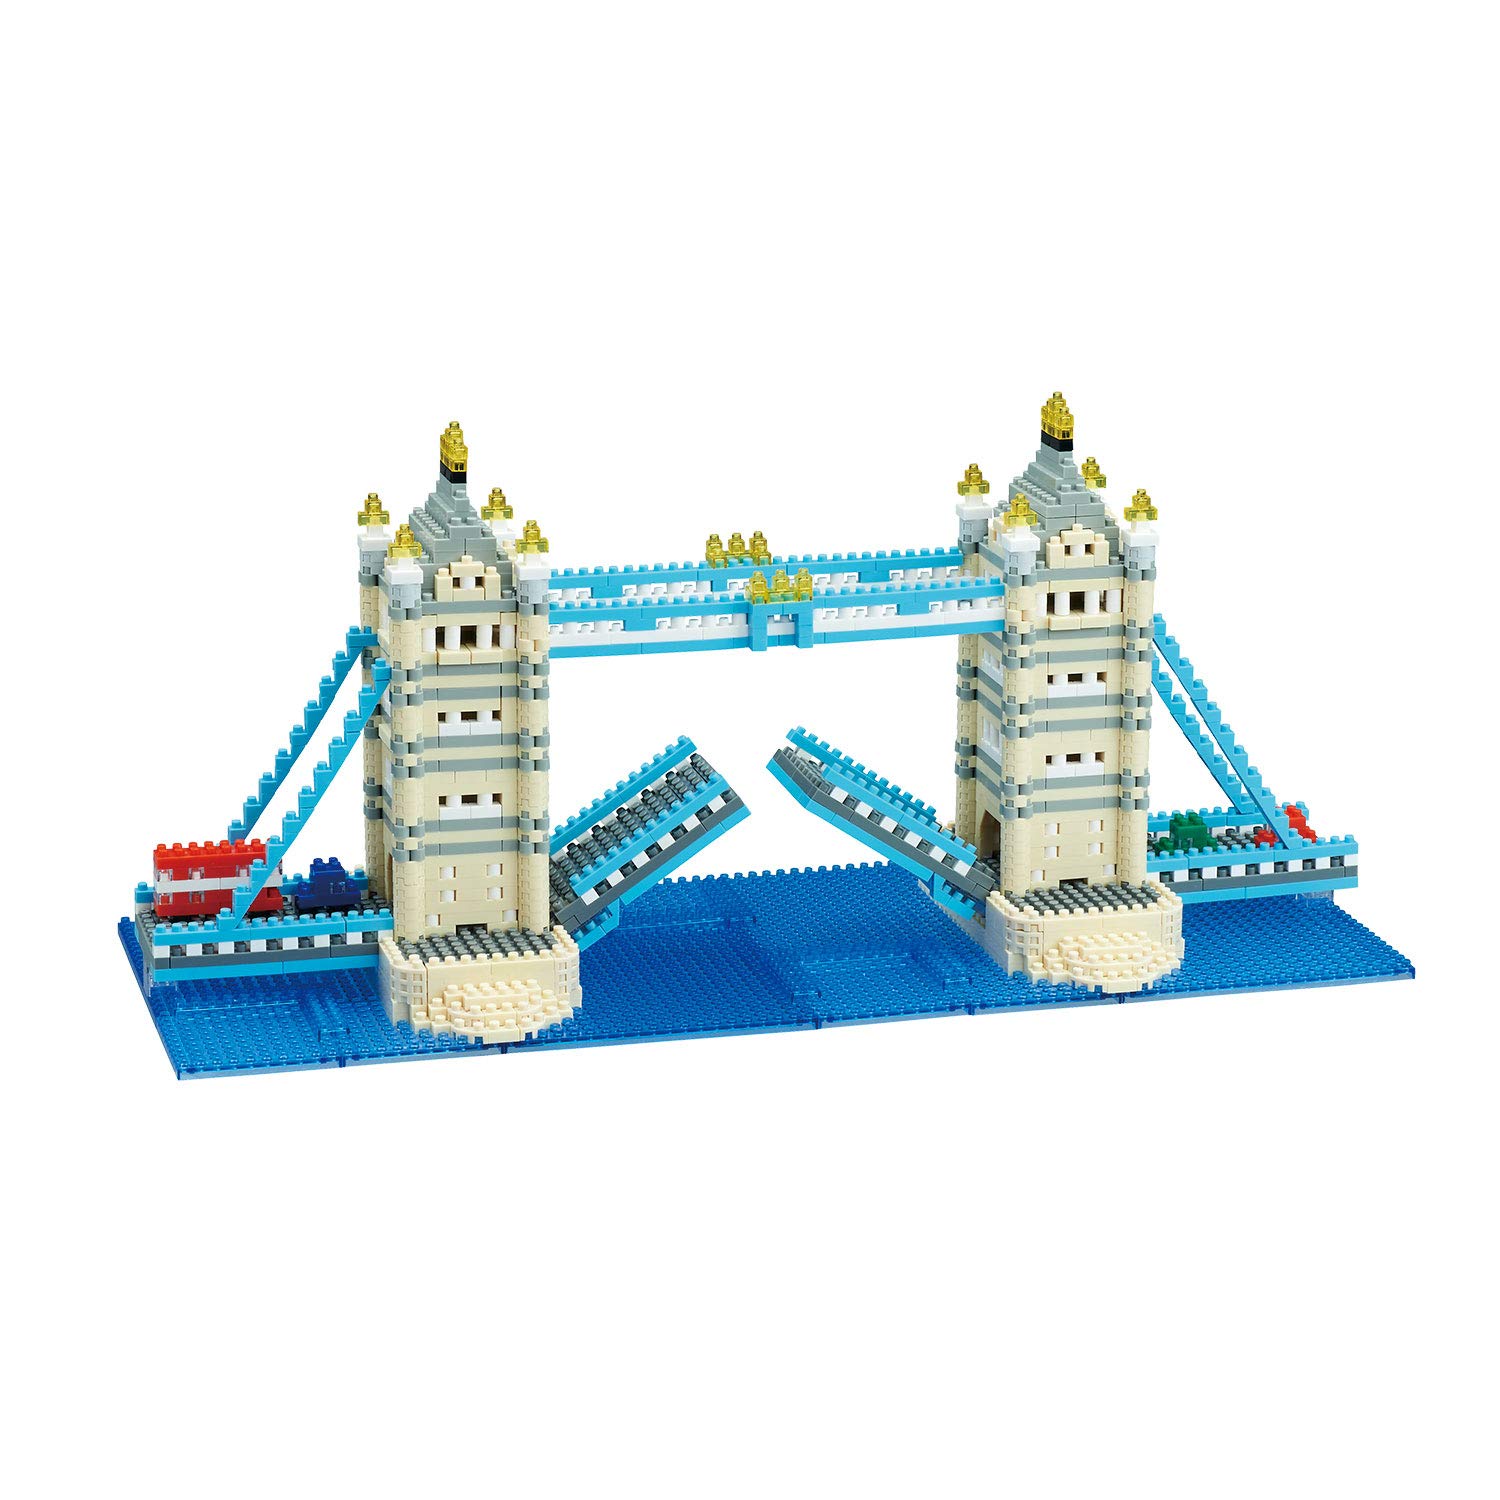 nanoblock - Tower Bridge Deluxe Edition World Famous, Advanced Hobby Series Building Kit